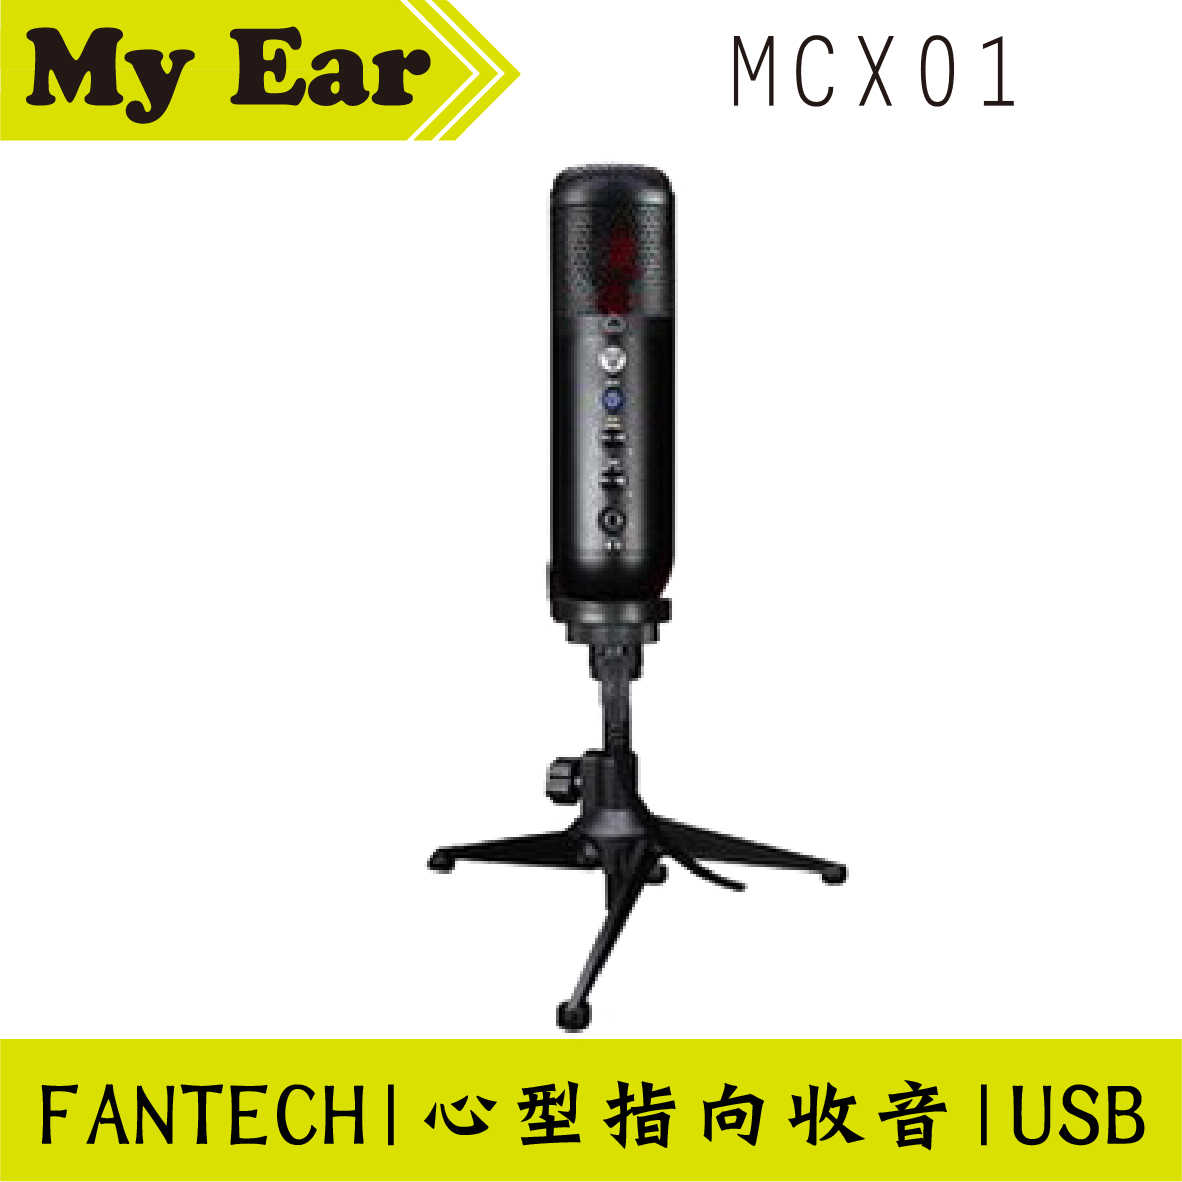 FANTECH MCX01 RGB 電容式 USB 心型指向 麥克風 | My Ear 耳機專門店